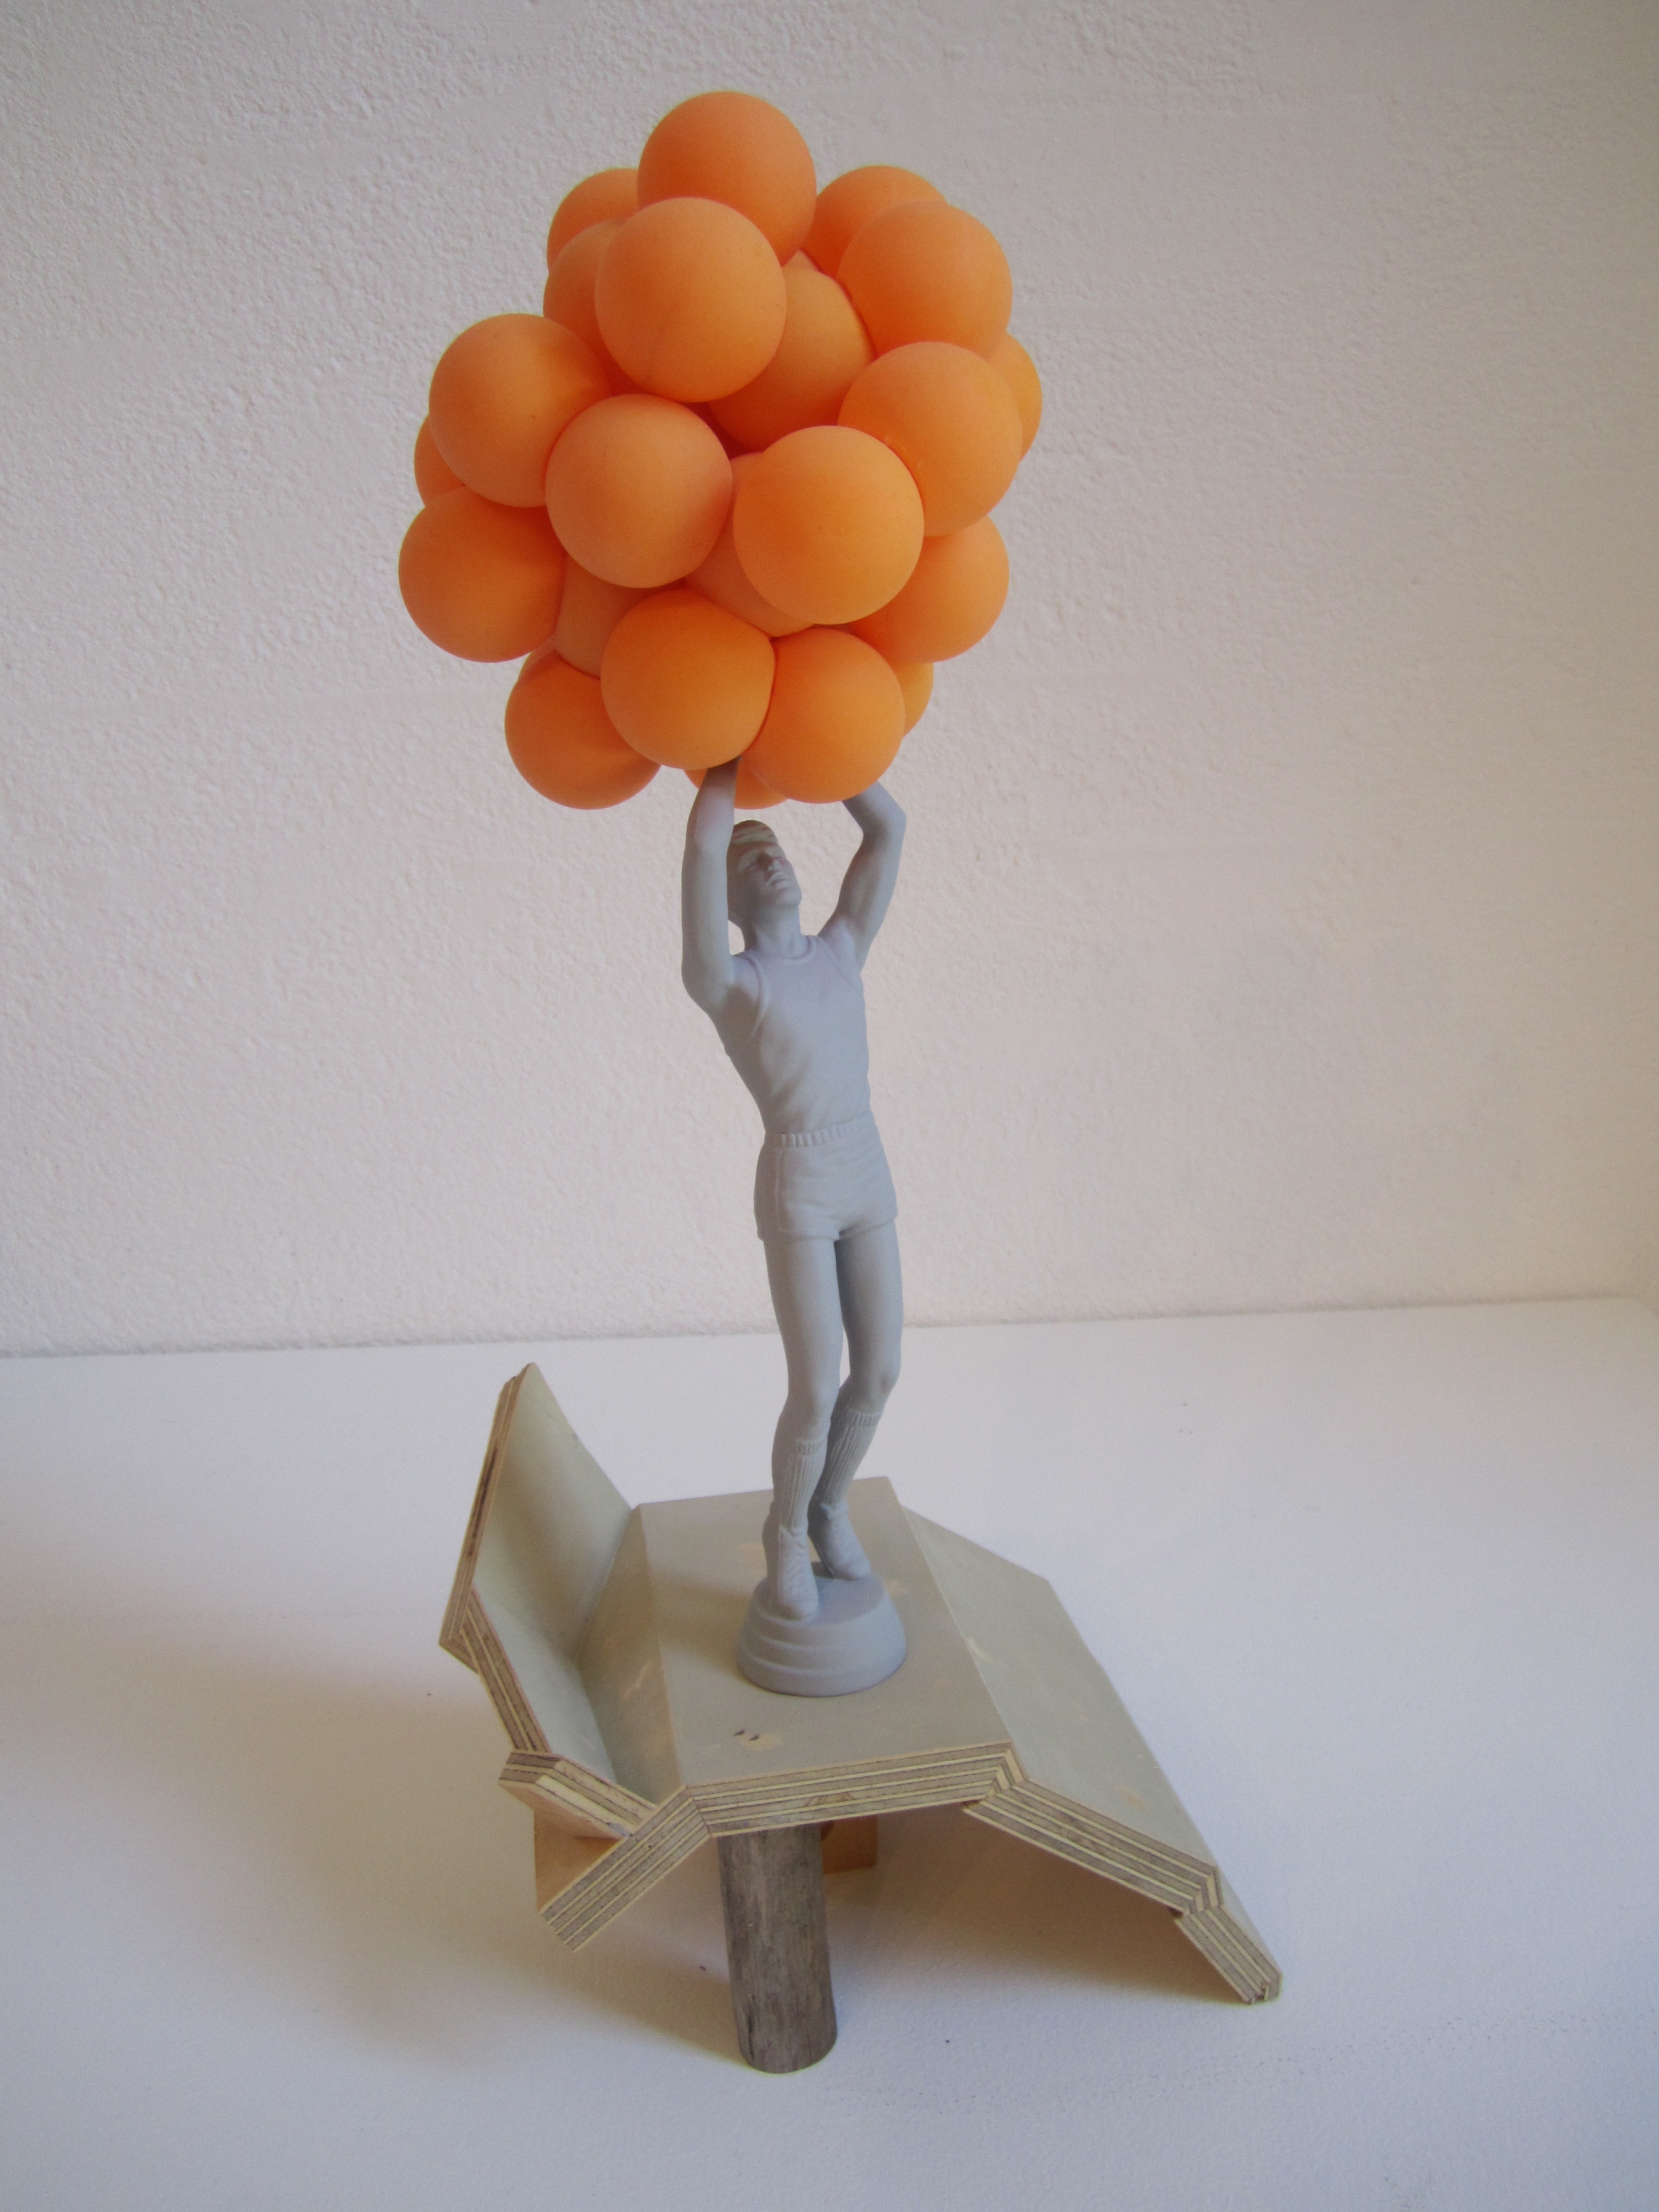   Orange Cloud, 2011    Enamel on acrylic, wood, table tennis balls 50 x 16 x 22 cm   